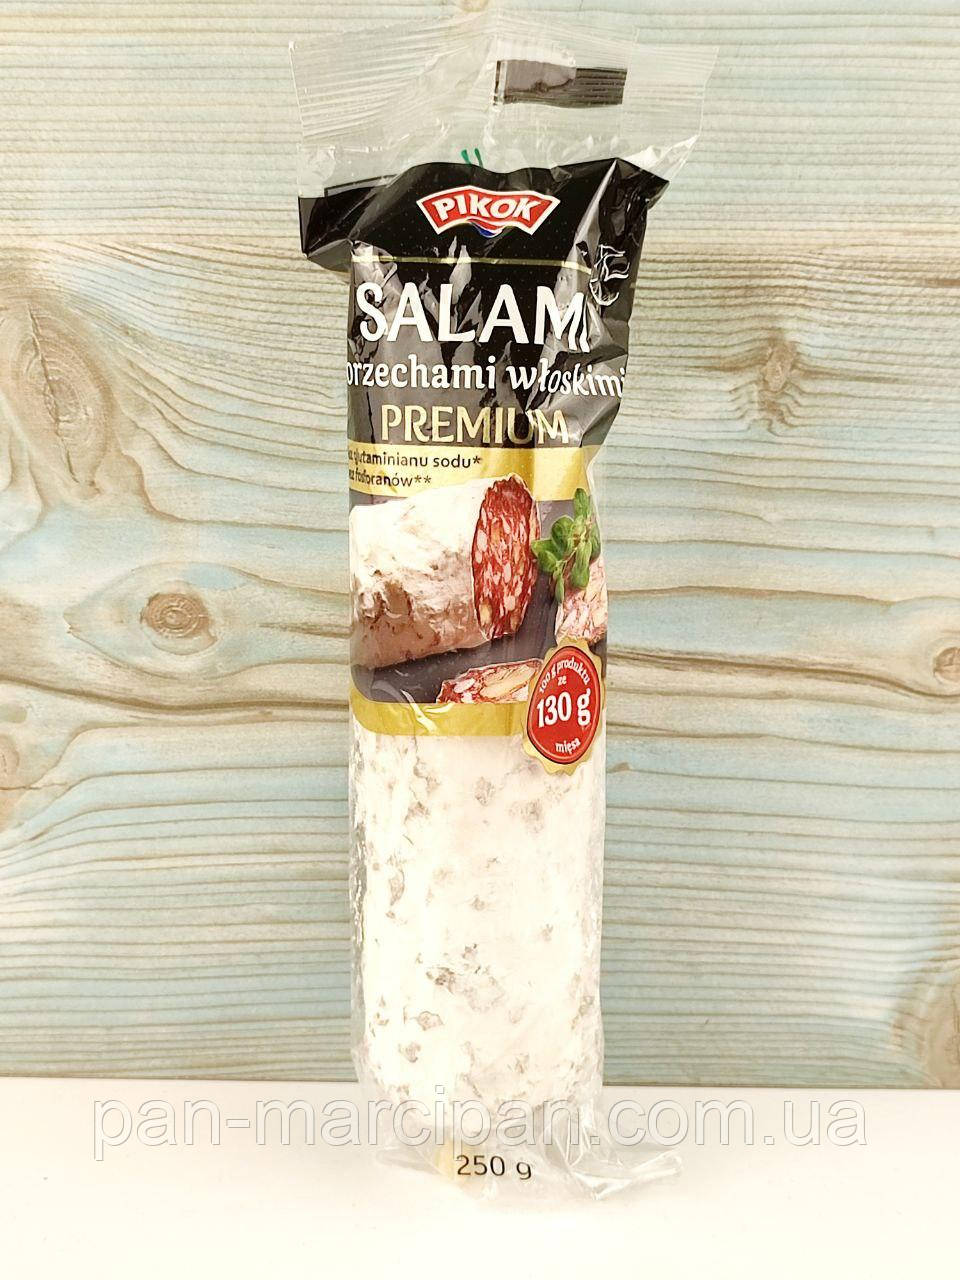 Салямі з горіхами Pikok Salami z orzechami wloskimi Premium 250 г